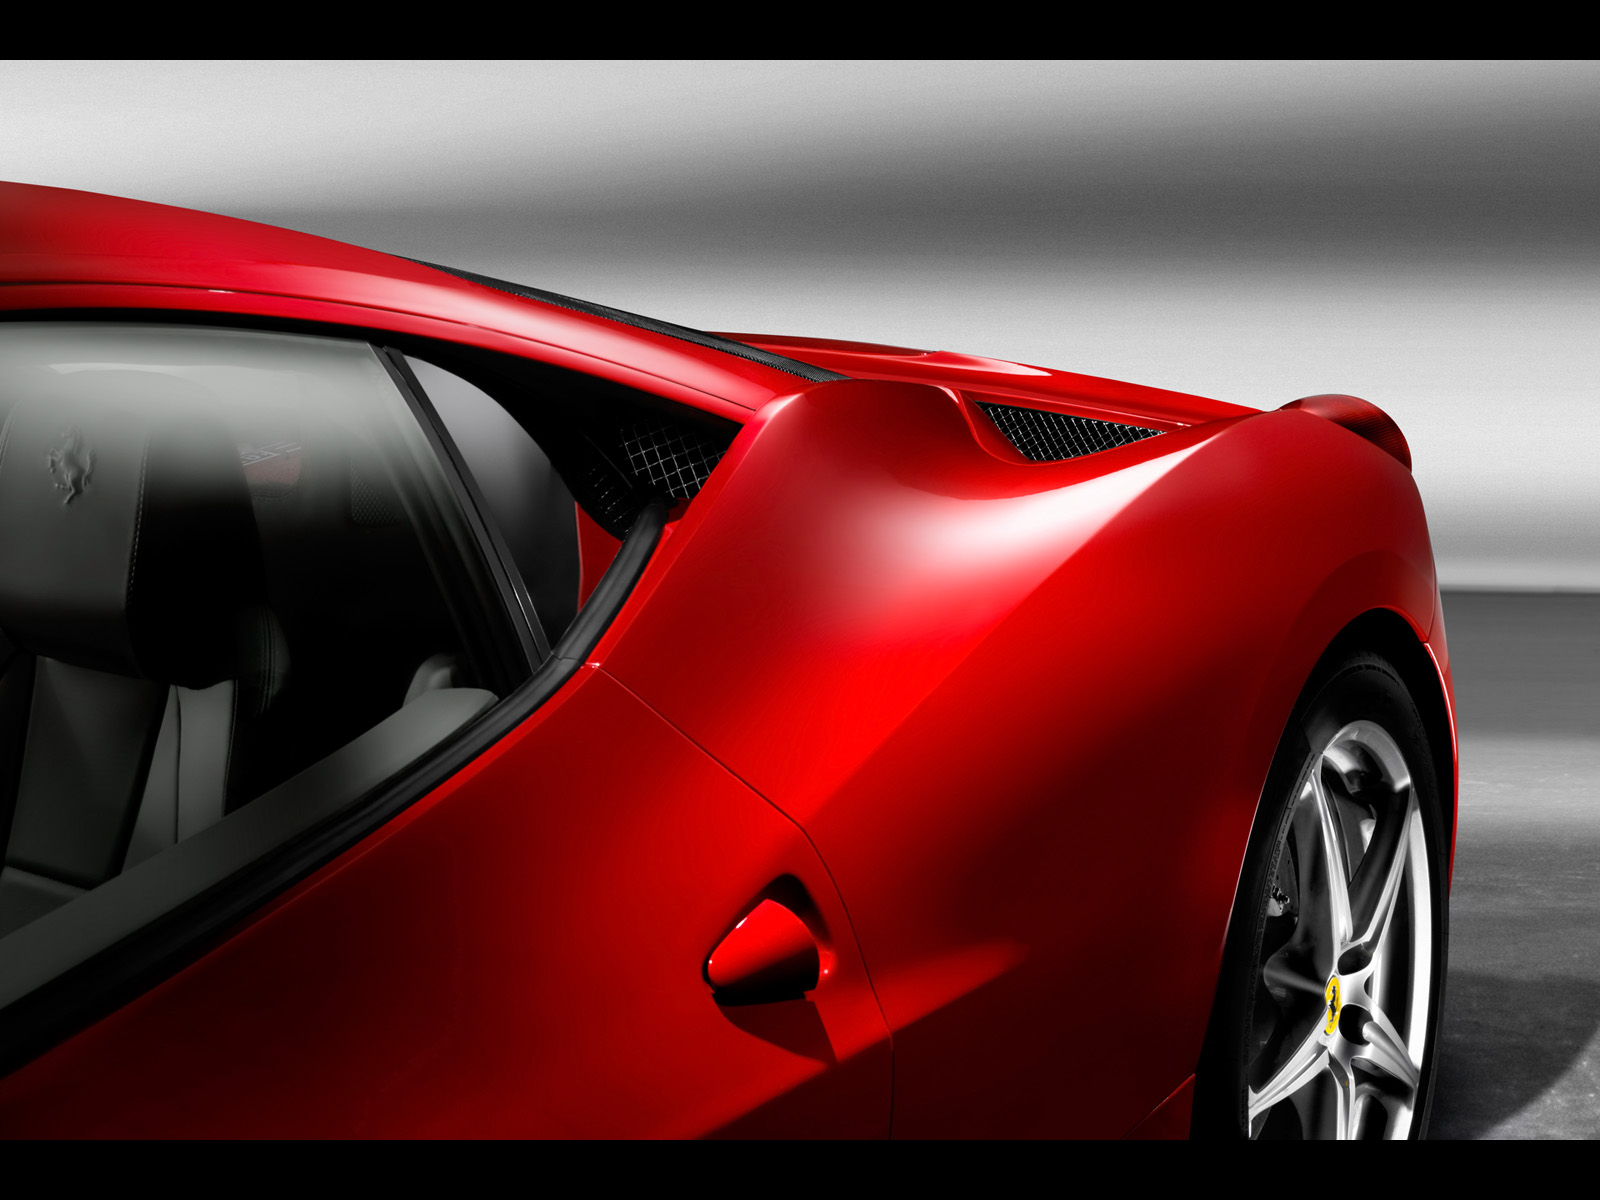 http://2.bp.blogspot.com/_viCh1SFyGrA/TOWj_05o9OI/AAAAAAAAAFE/2_iJpy5LmE8/s1600/2010-Ferrari-458-Italia-Rear-Section-1600x1200.jpg